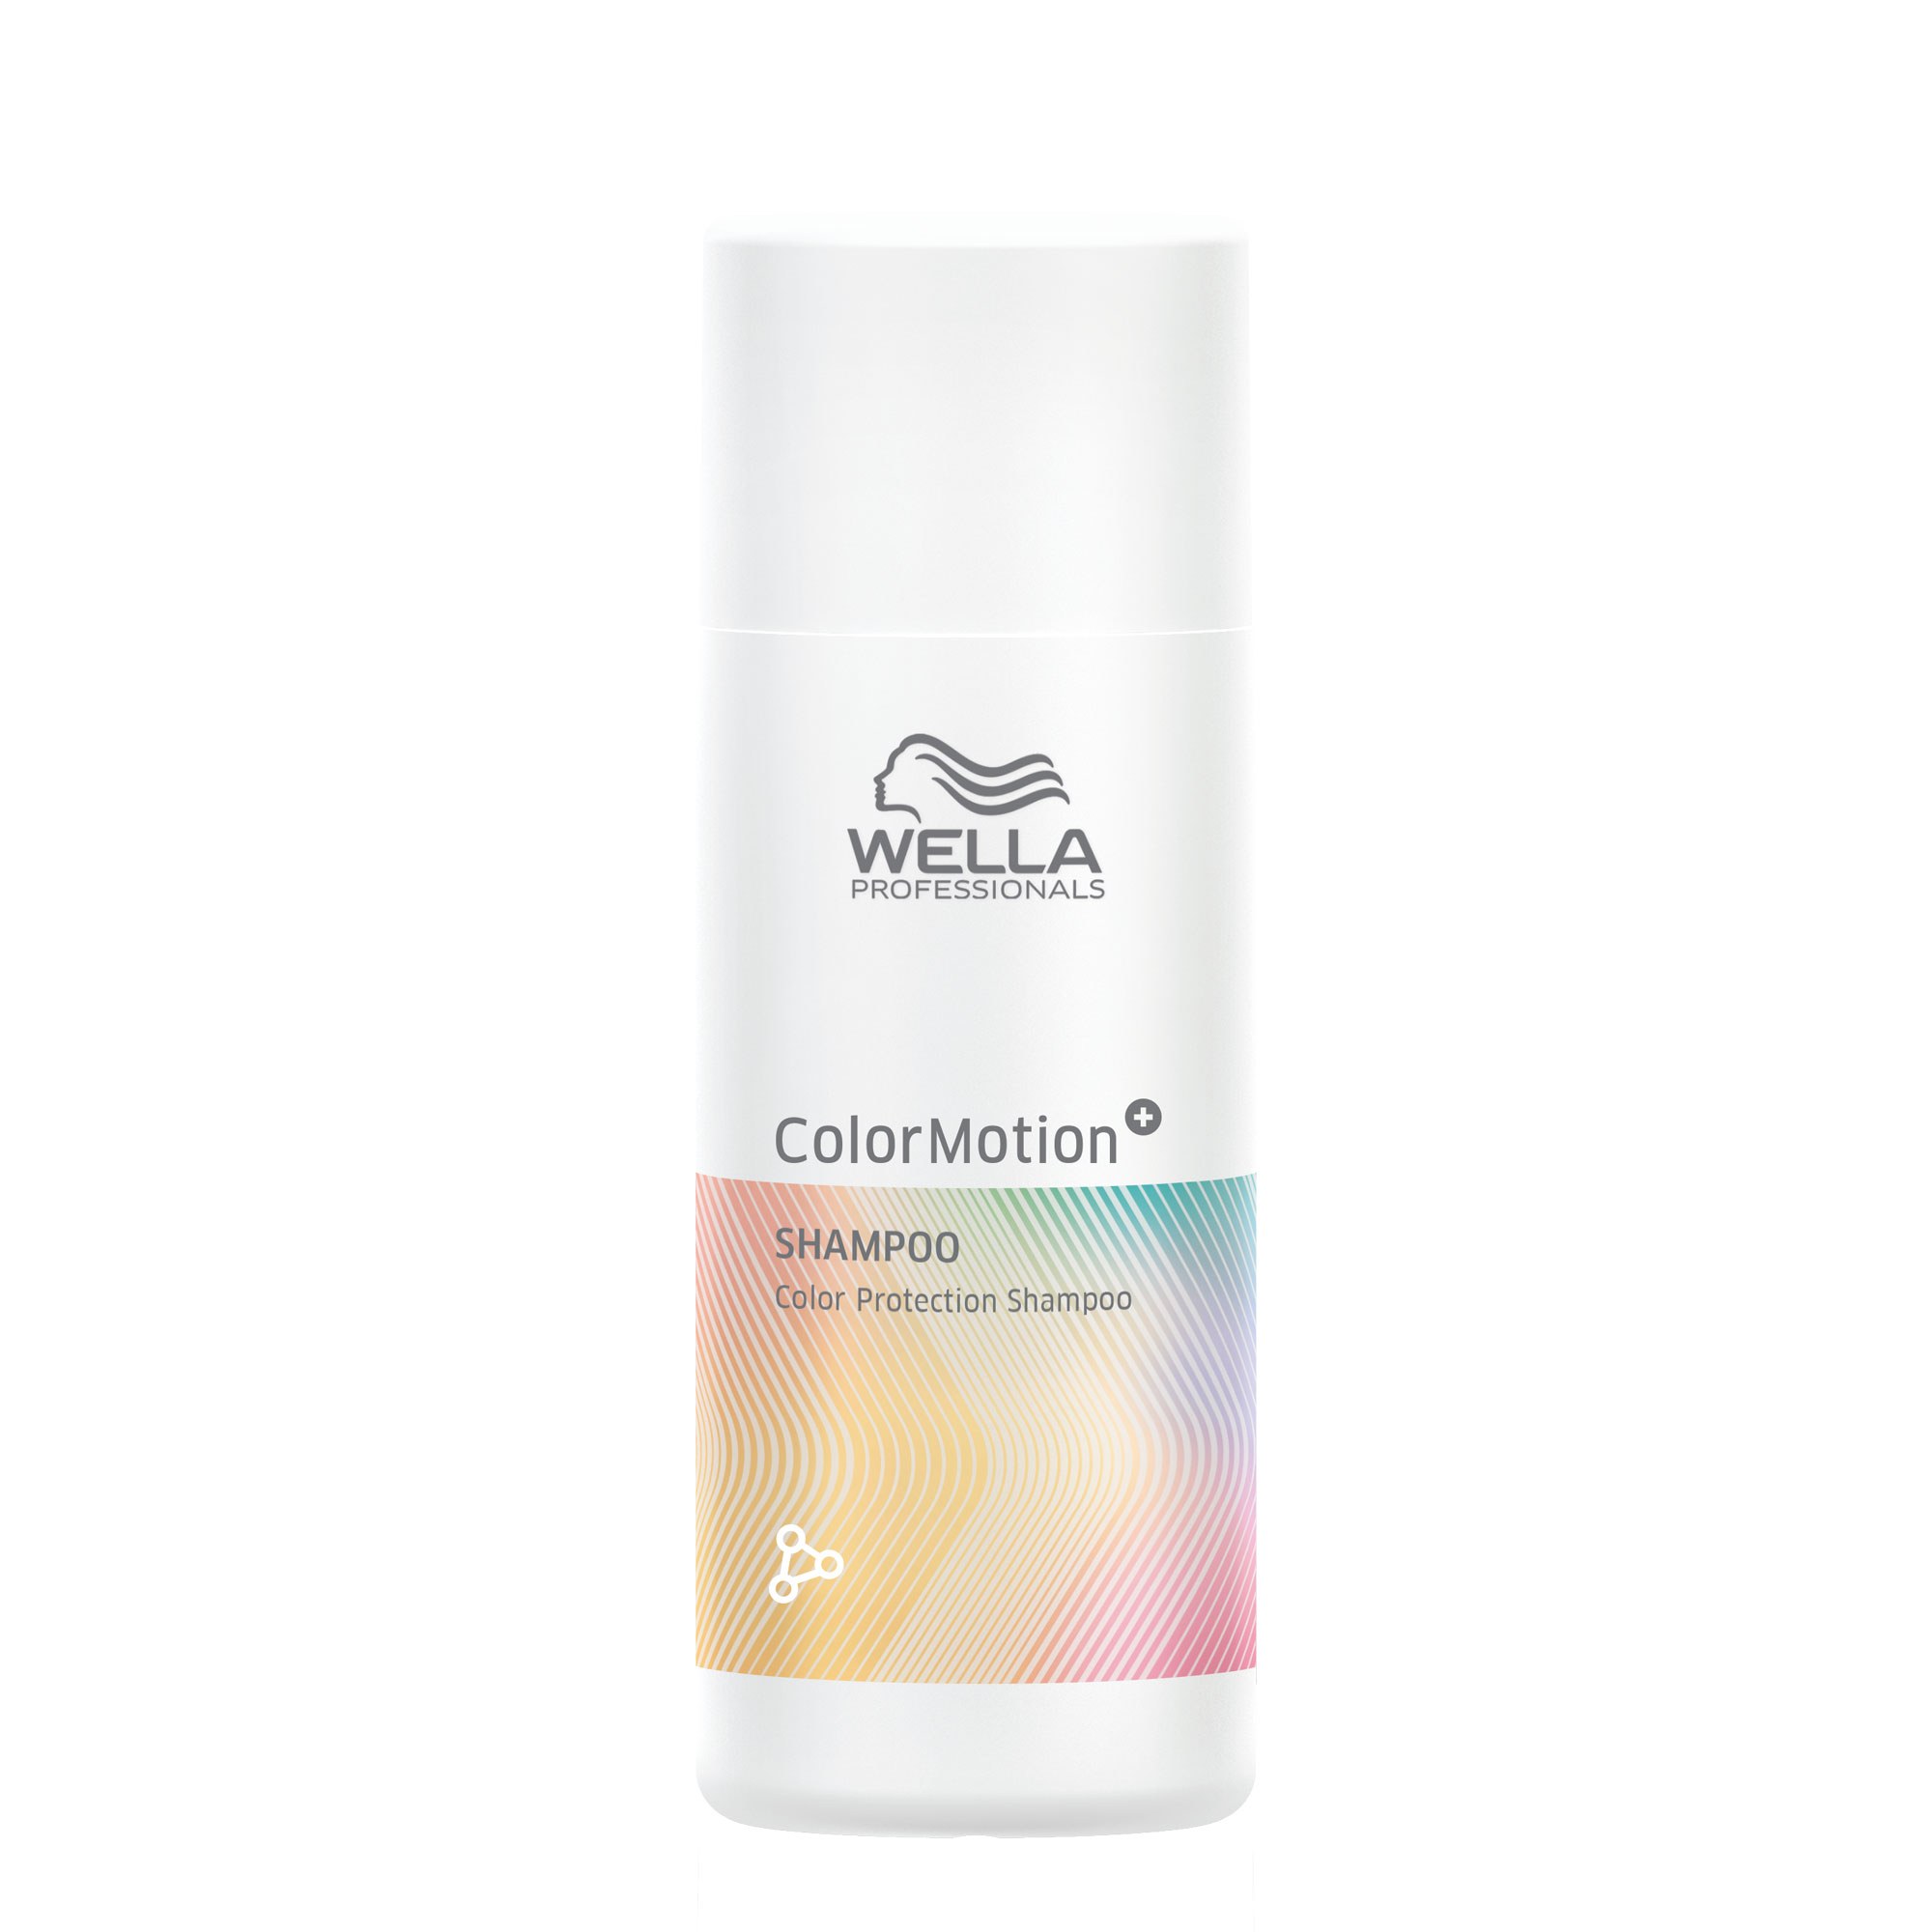 Wella ColorMotion+ Shampoo